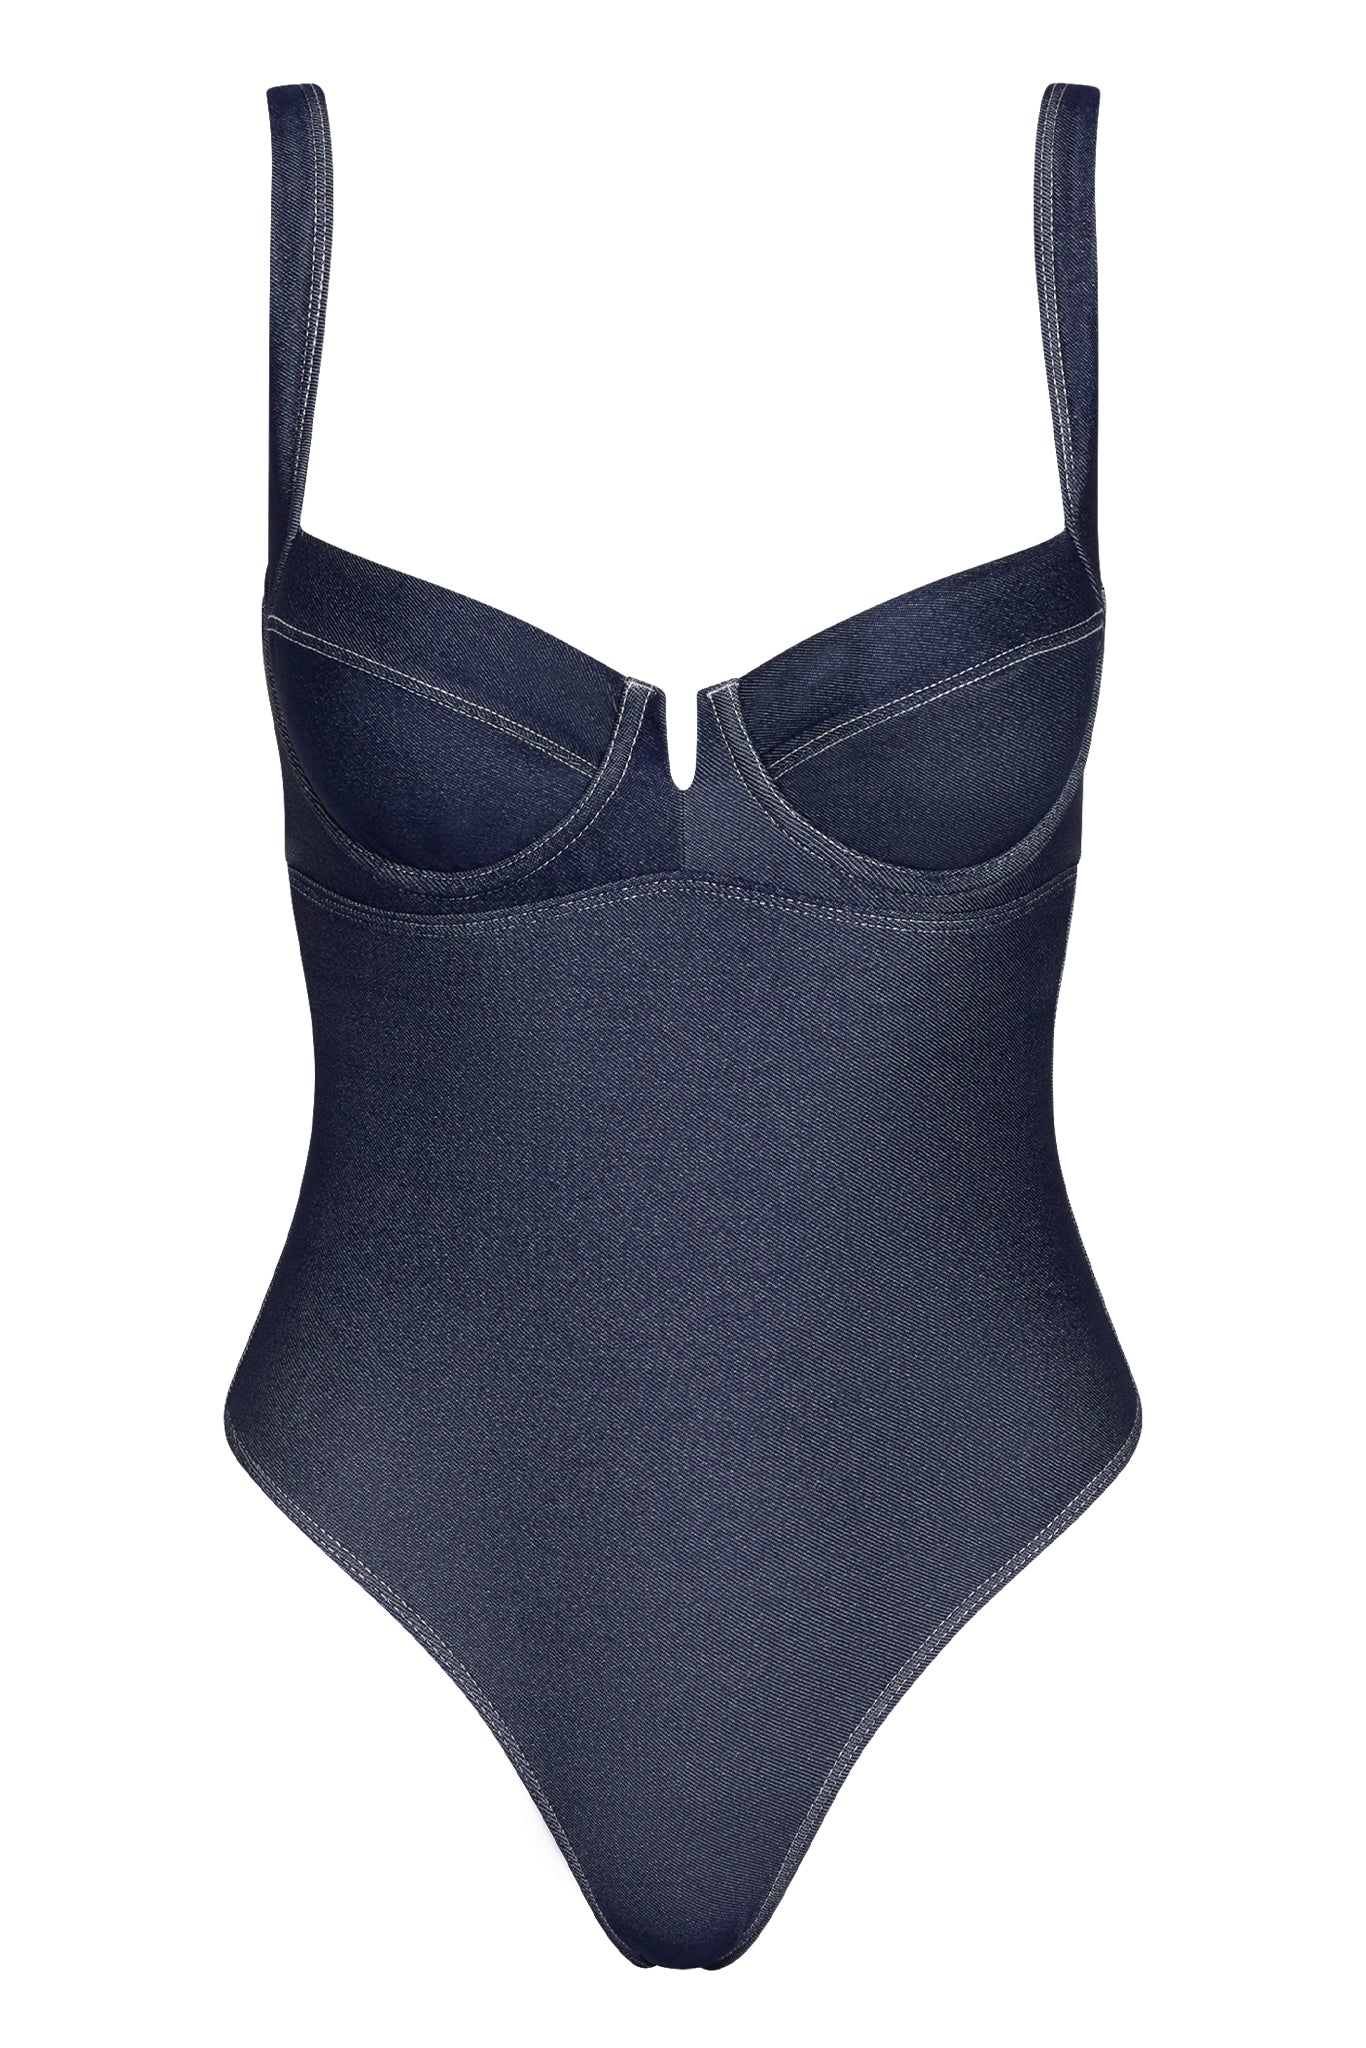 WALNUT Geometric Print Deep V-Neck Halter One-Piece Swimsuit Women